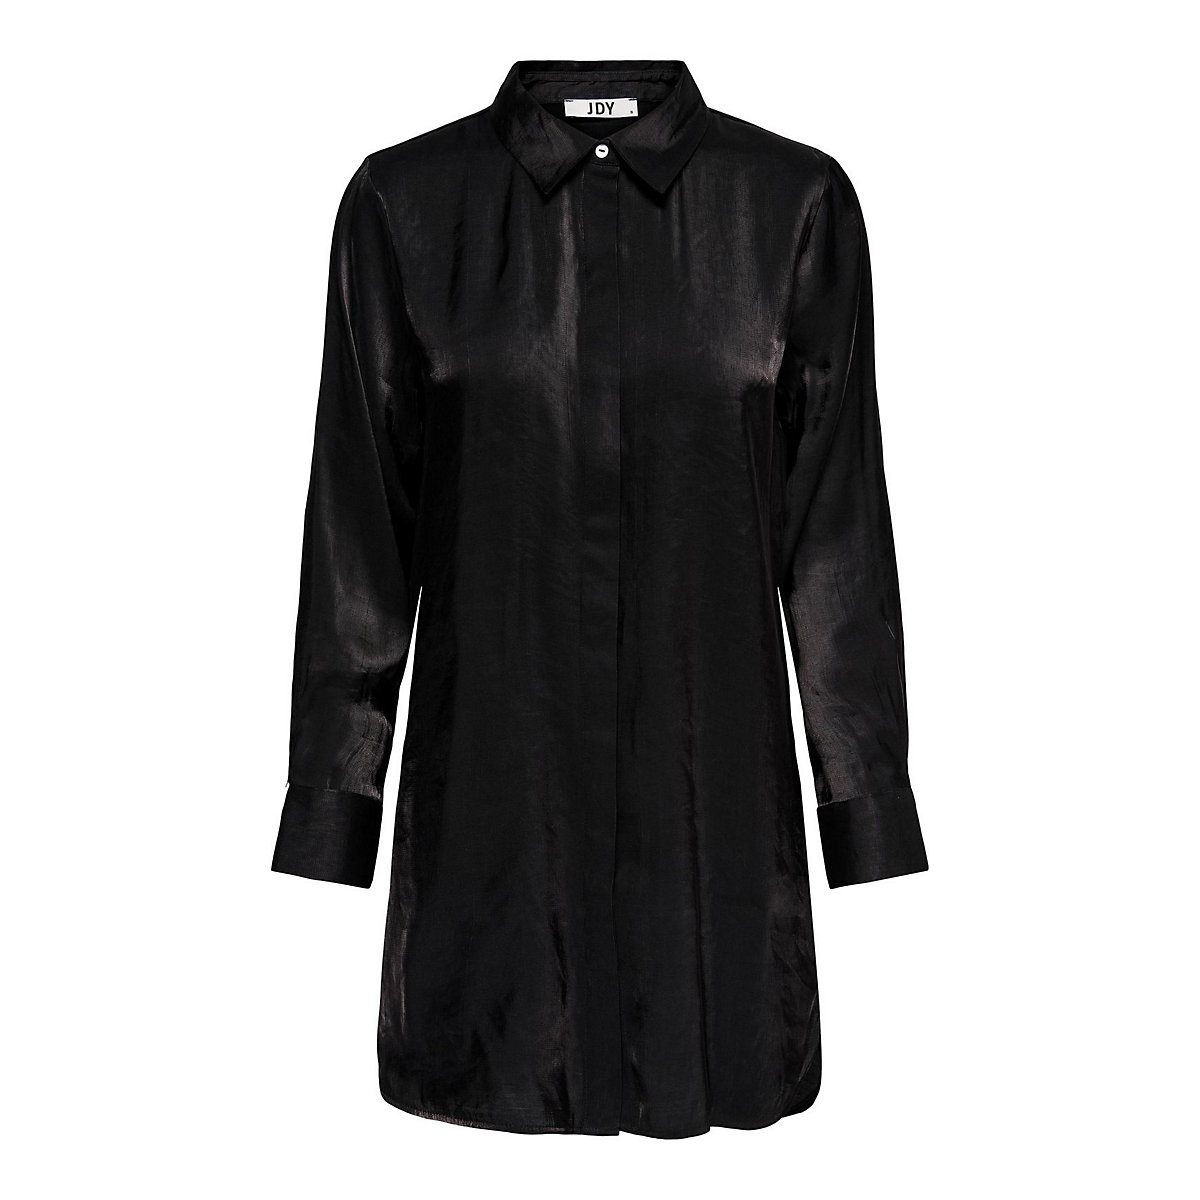 Jacqueline de Yong Oversized Satin Hemd Bluse Lang Business Tunika JDYPARIS schwarz